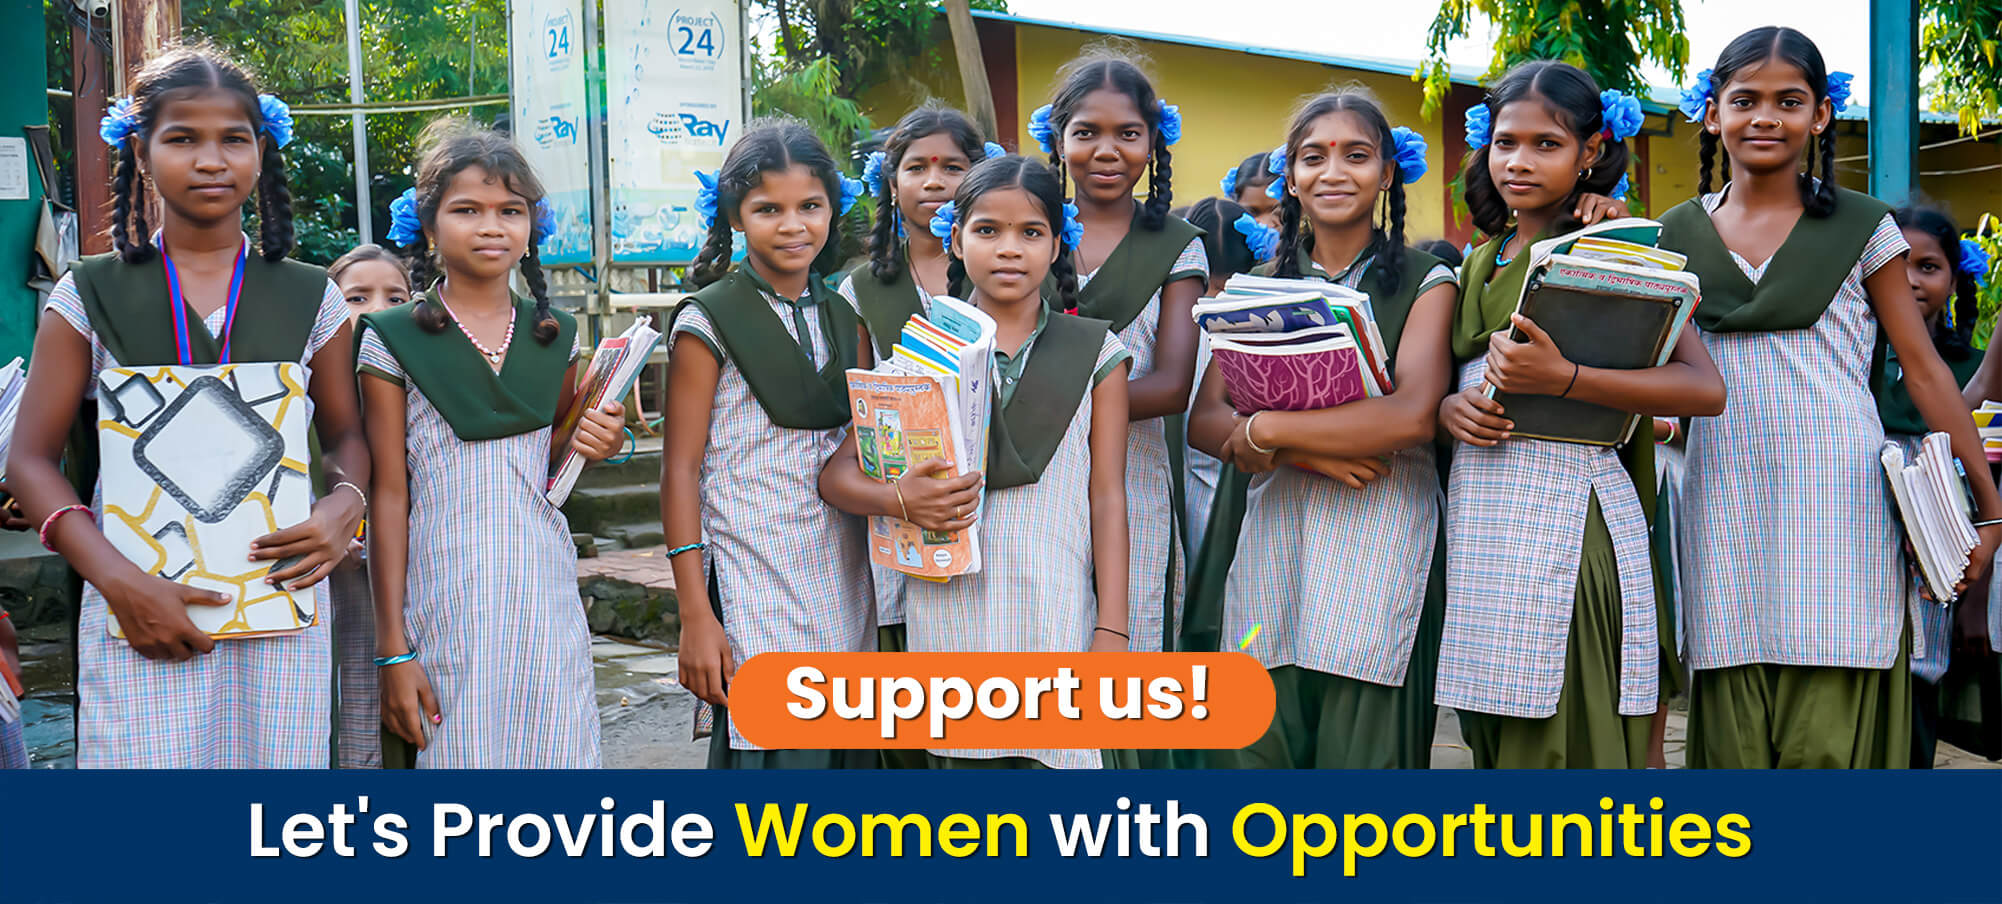 Education for Girls, Gender Equality, Child Help Foundation